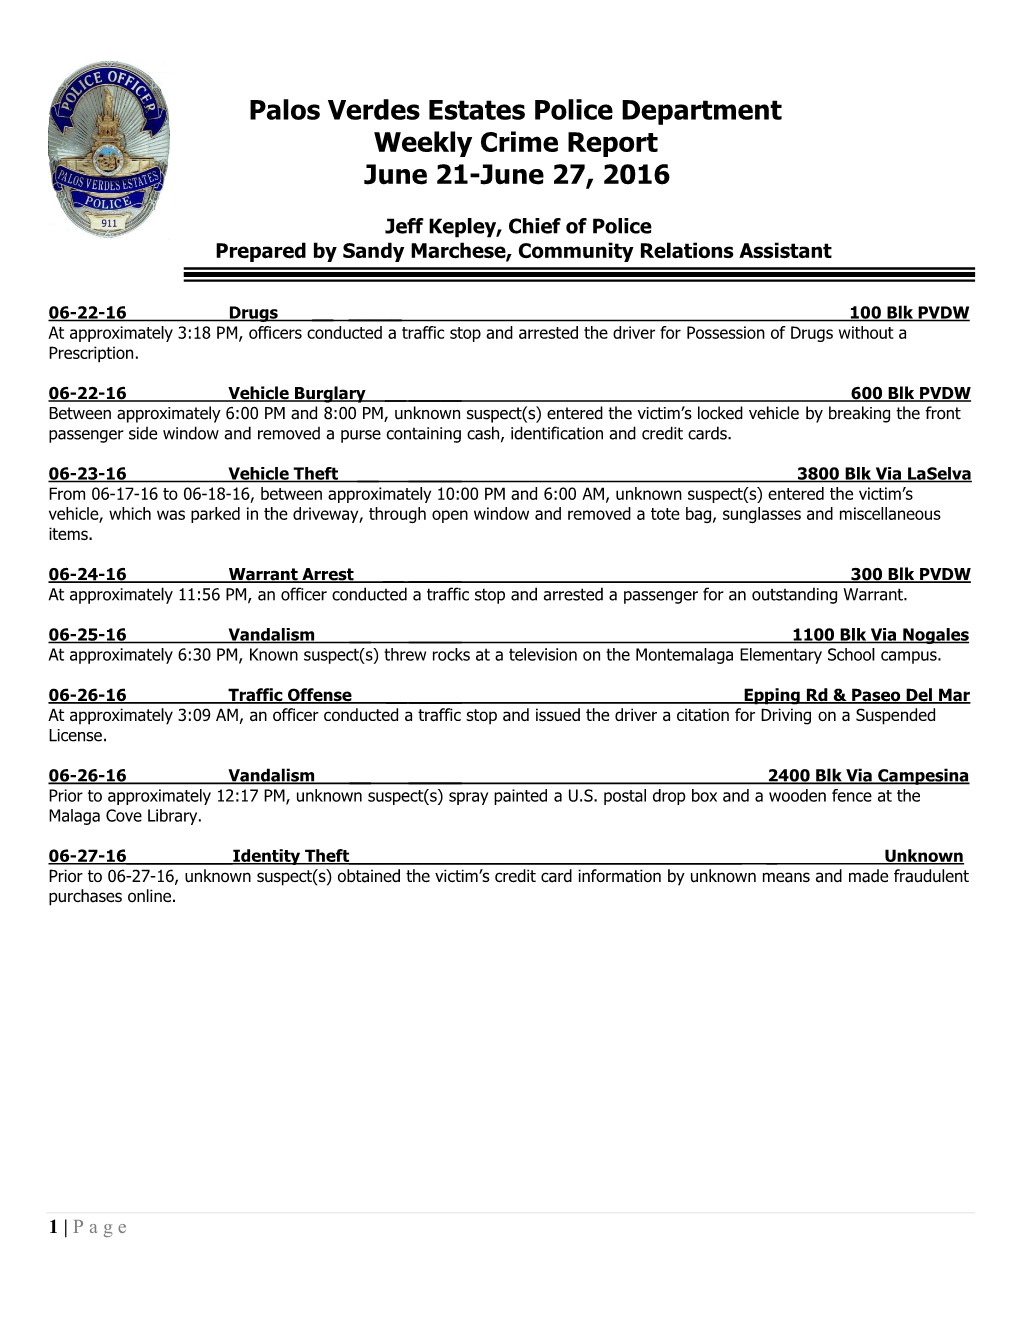 Palos Verdes Estates Police Department Weekly Crime Report June 21-June 27, 2016